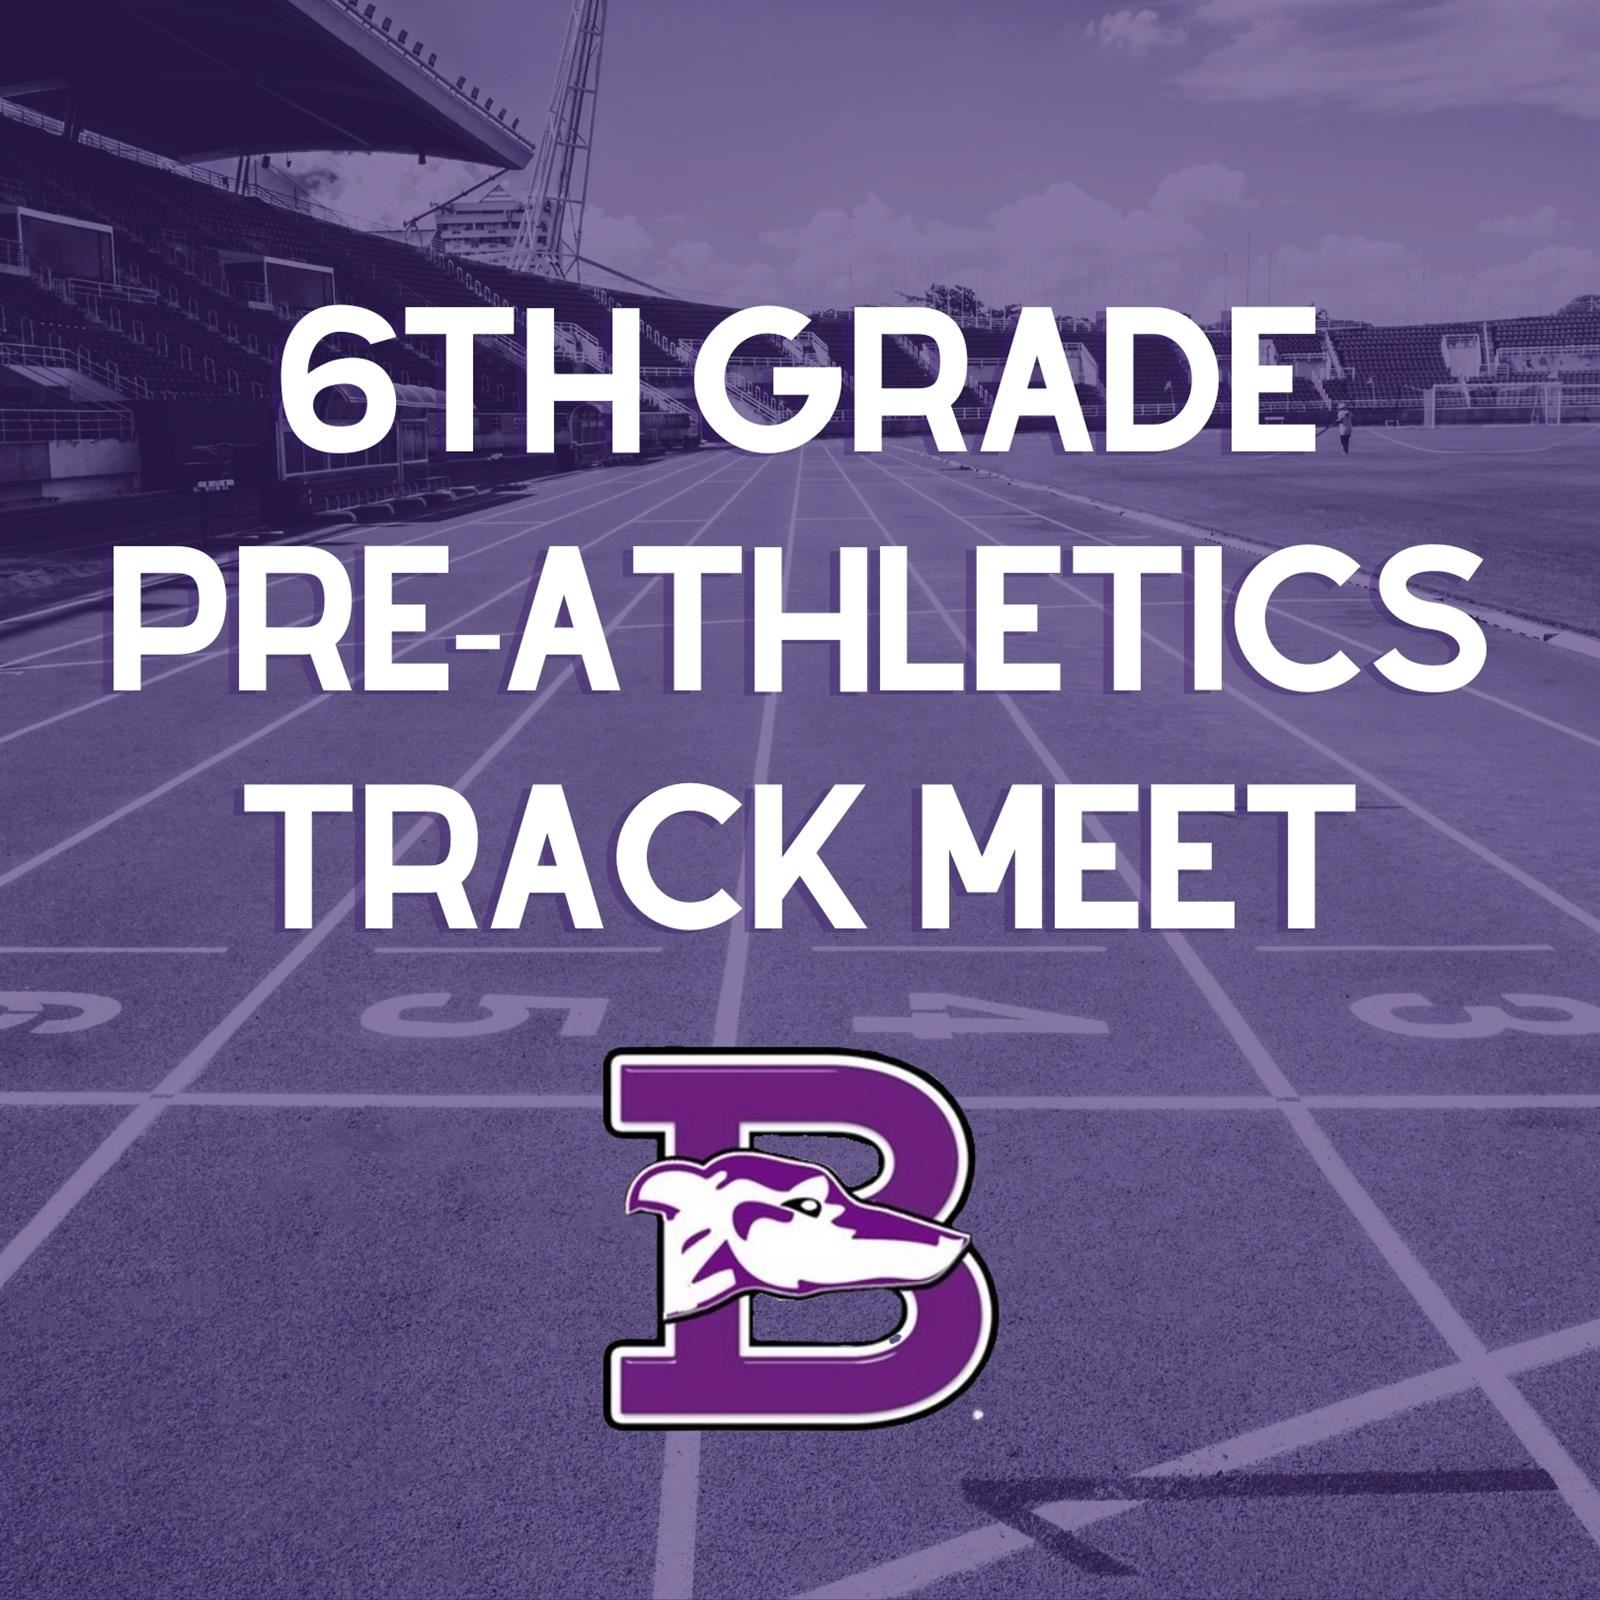  6th grade pre-athletics track meet information